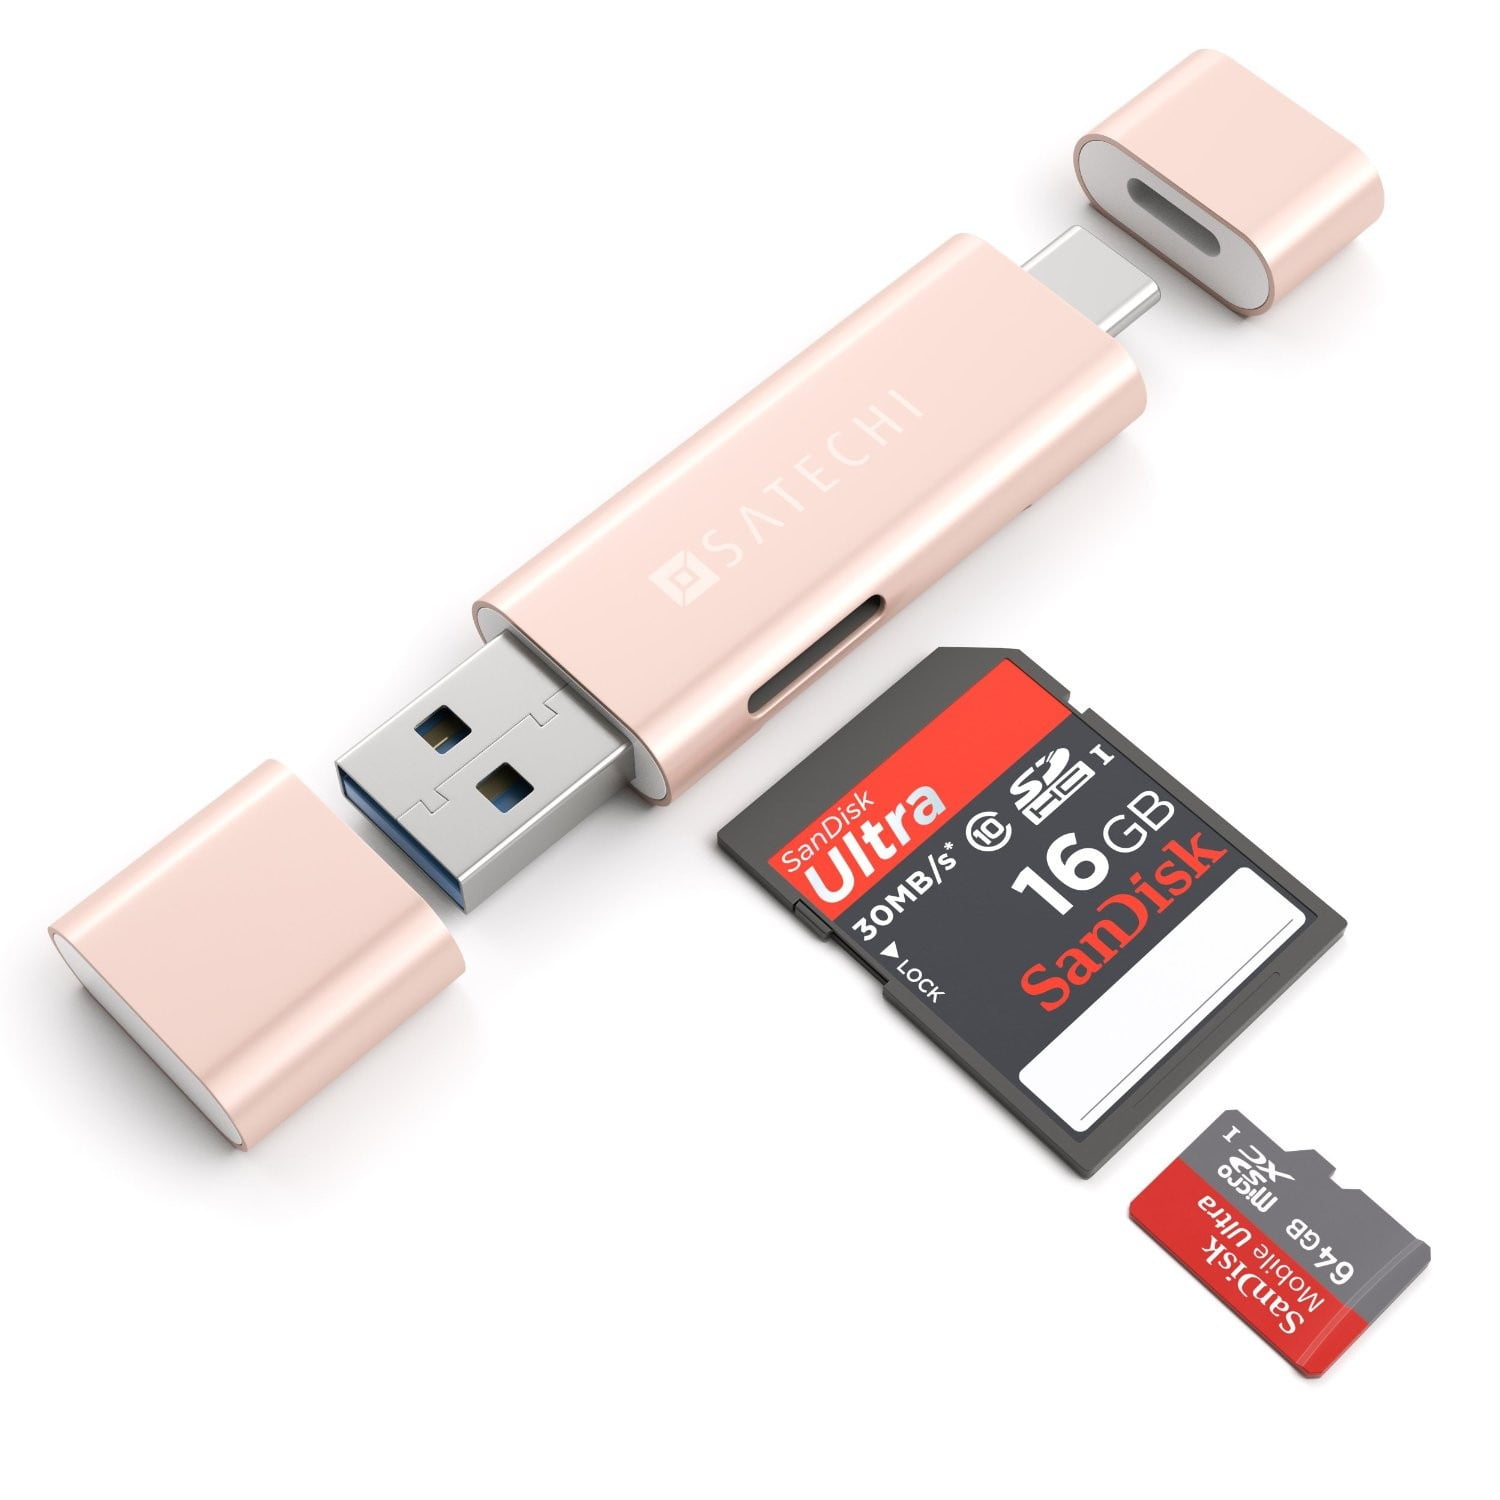 Type-C USB 3.0 Micro/SD Card Reader - Satechi